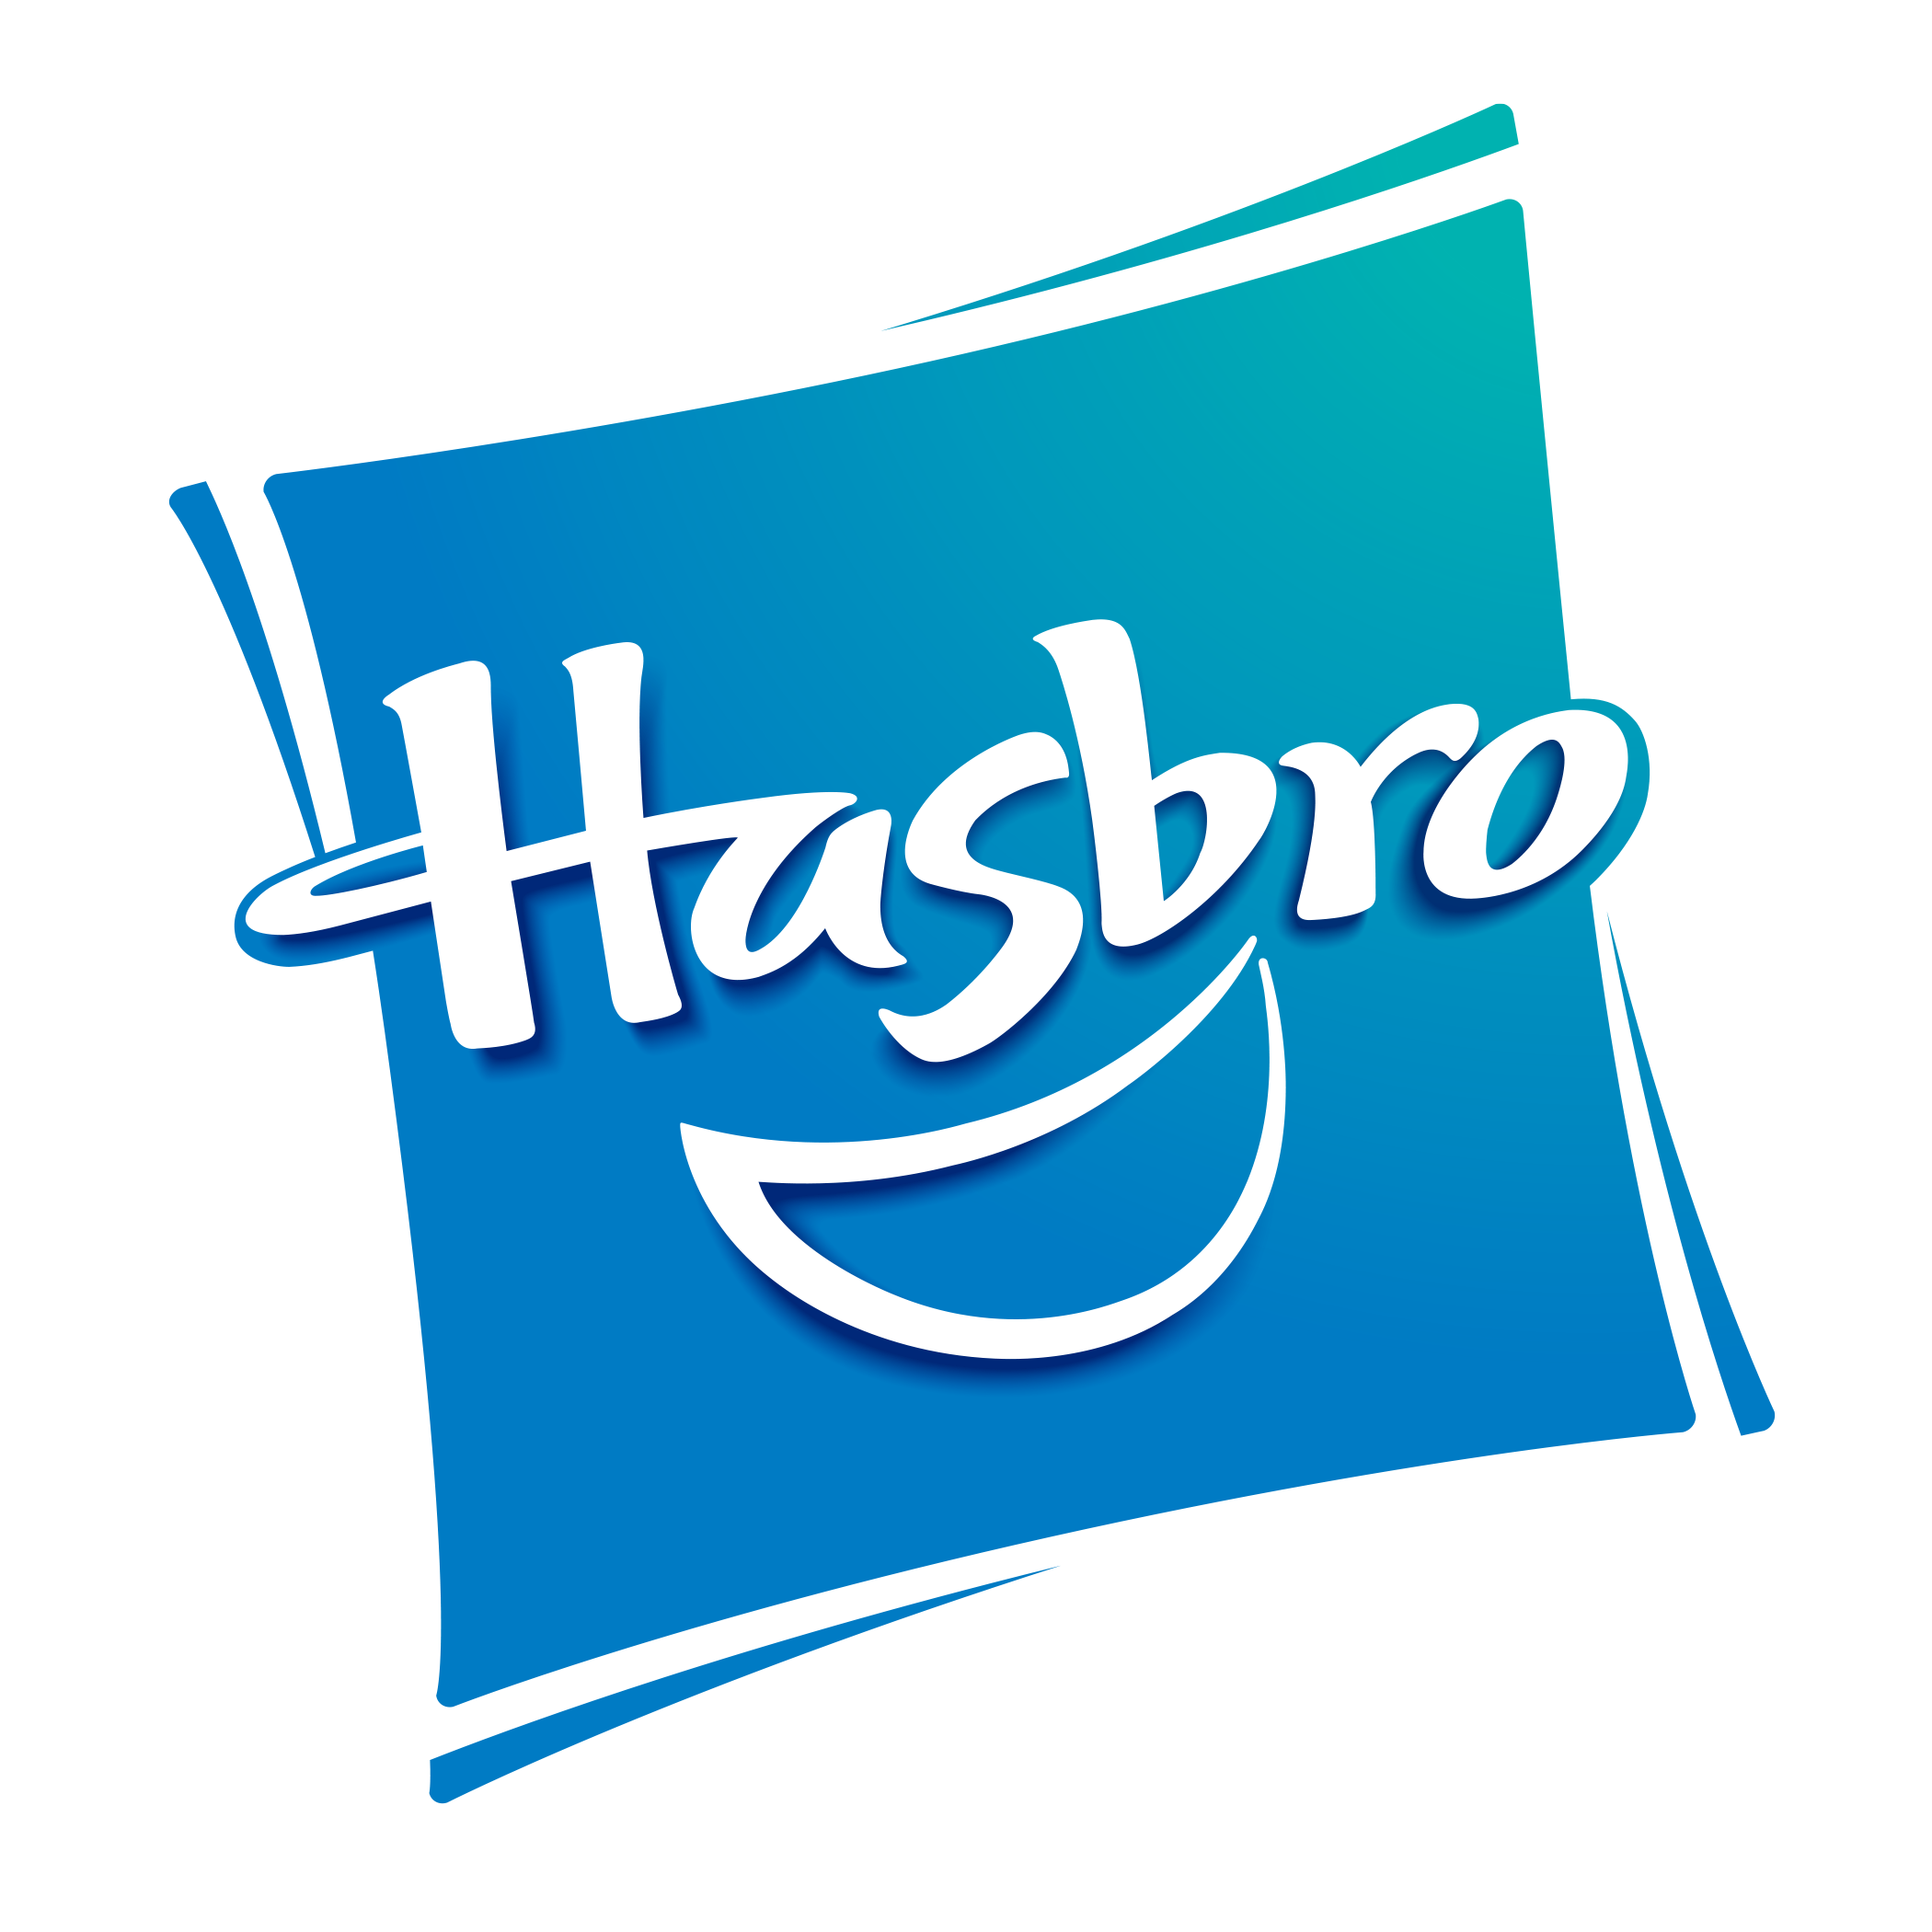 [Hasbro, Inc.](https://corporate.hasbro.com/en-us) logo